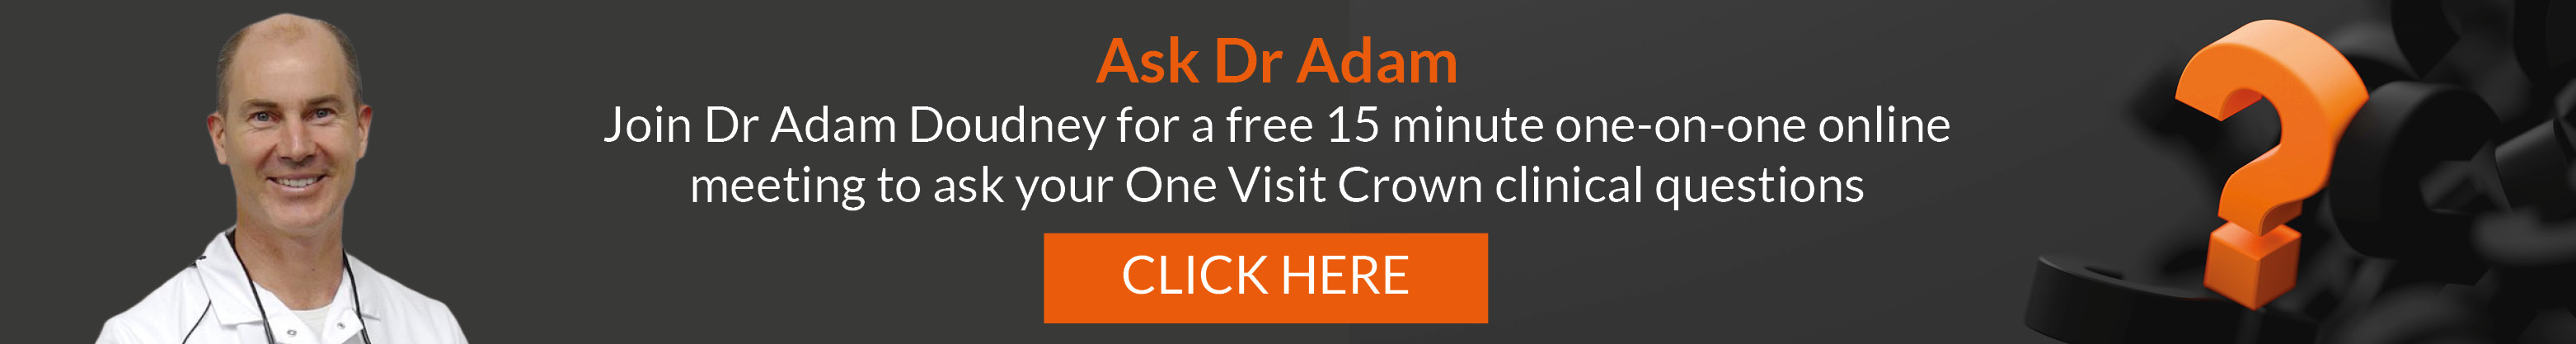 Ask-Dr-Adam-Banner